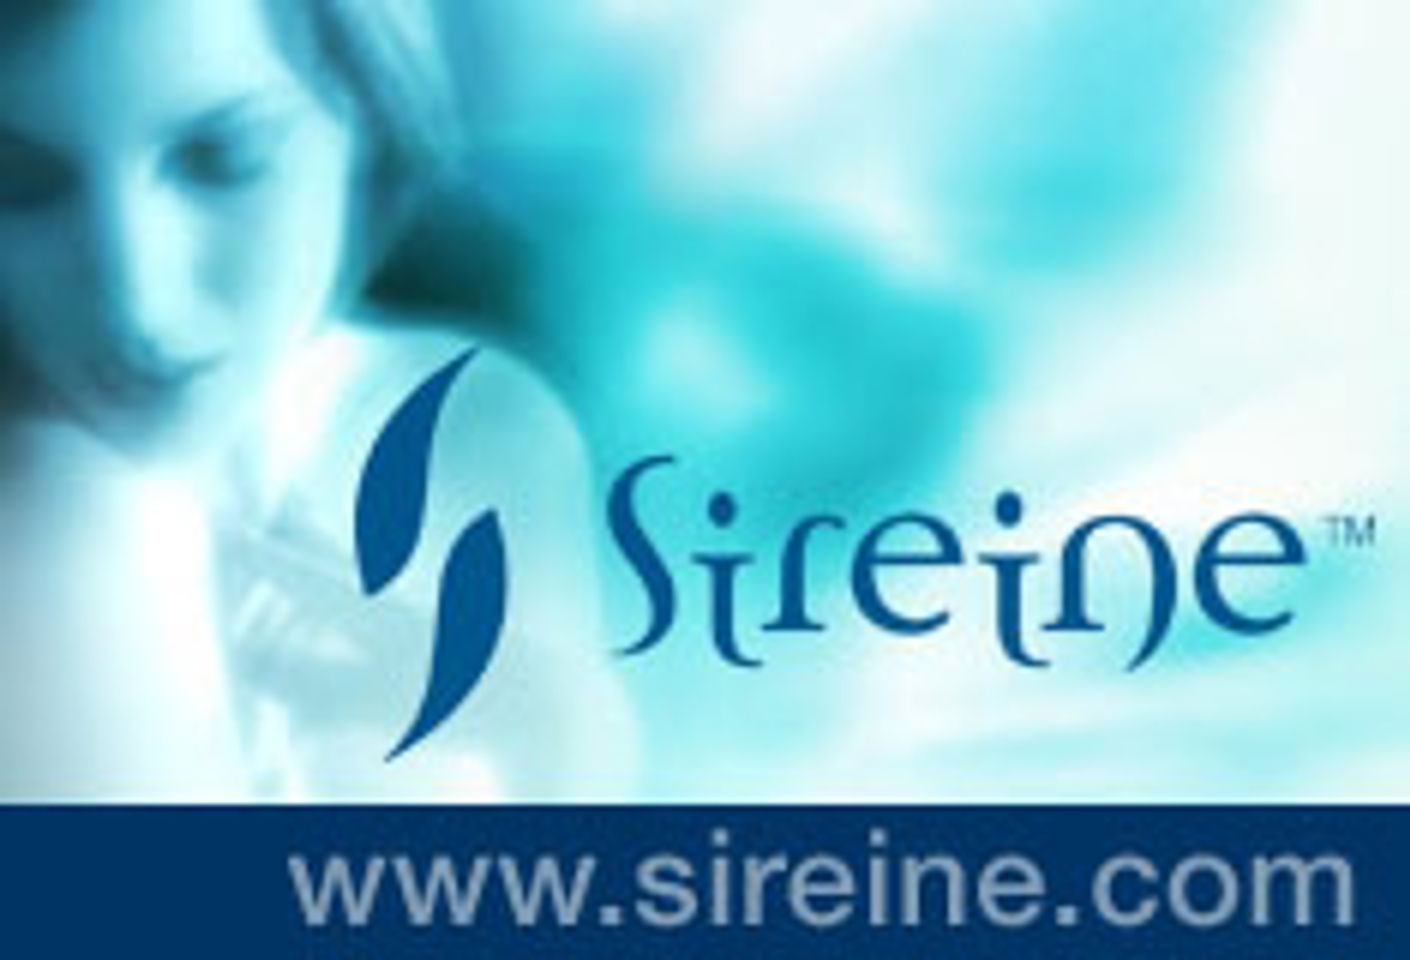 Sireine.com: "Elegant and Tasteful" Adult DVD Rentals